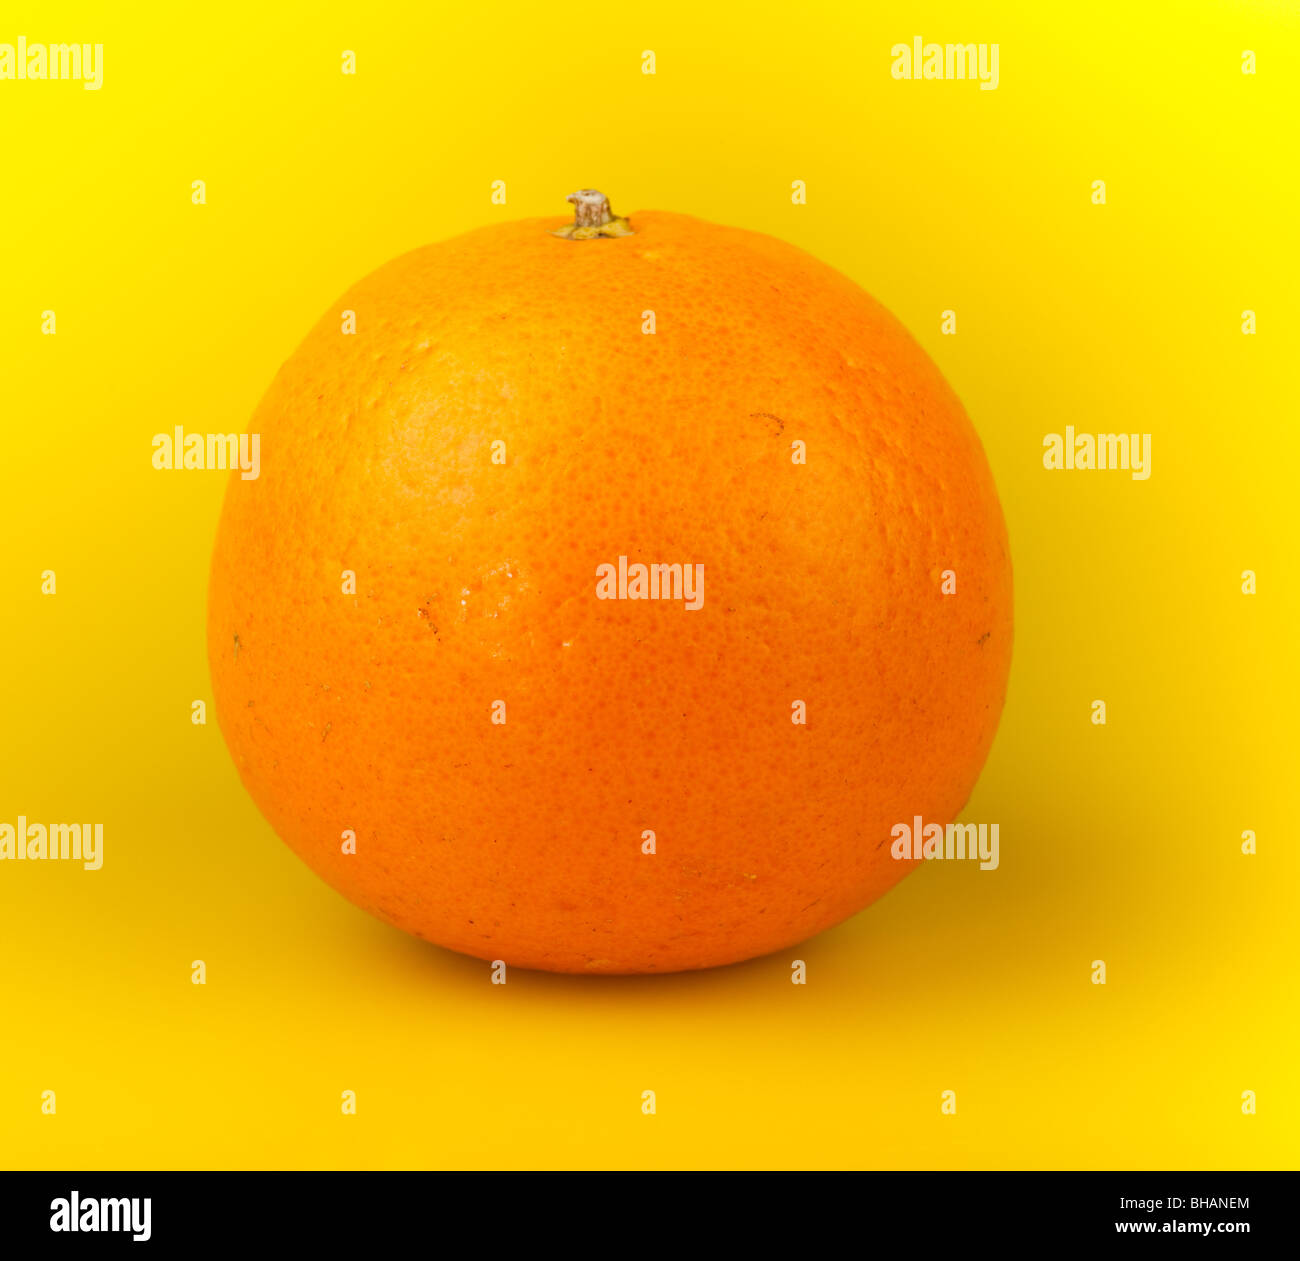 One orange tangerine on a yellow background. Stock Photo